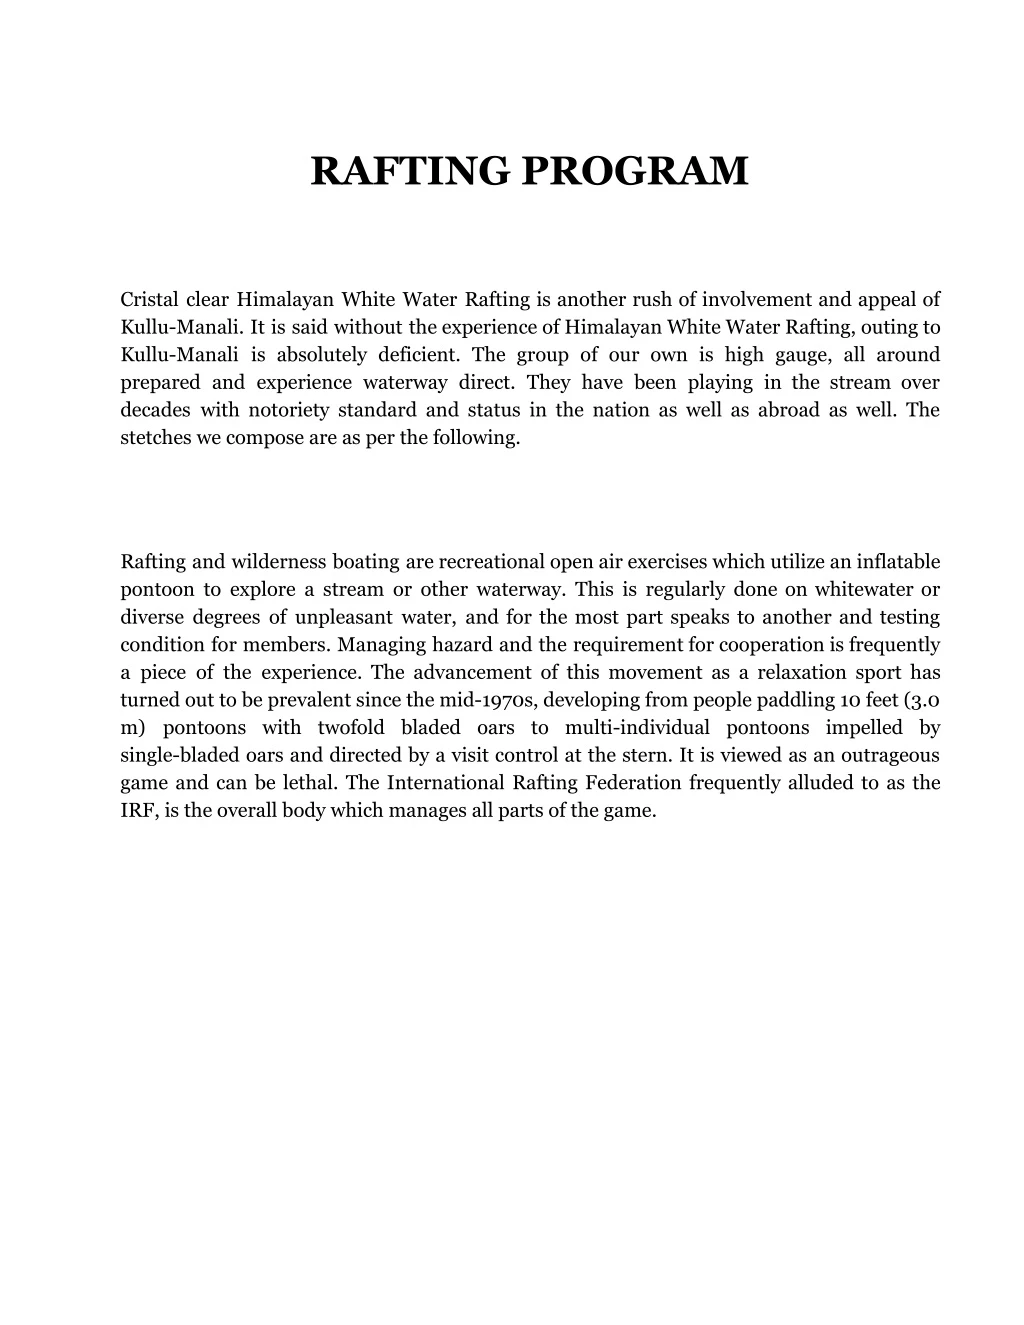 rafting program